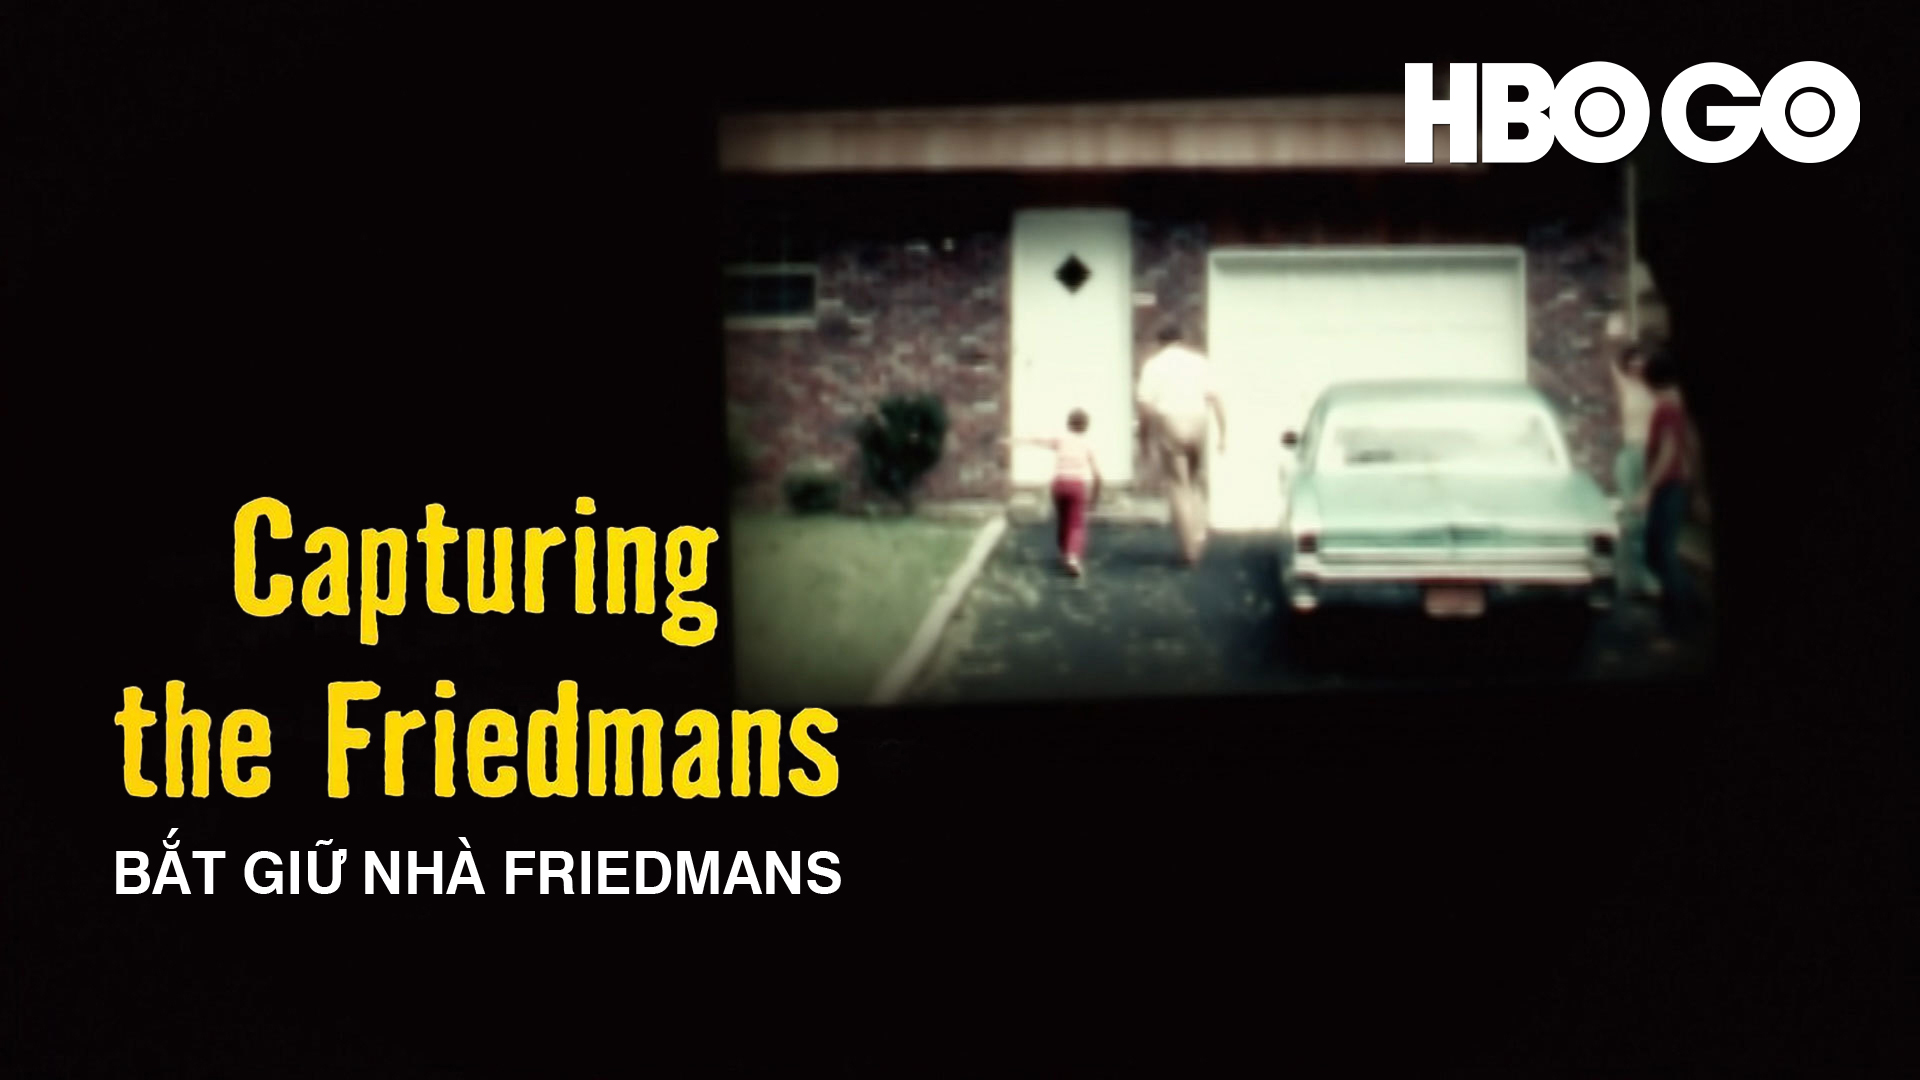 25. Phim Capturing the Friedmans - Bắt giữ Friedmans